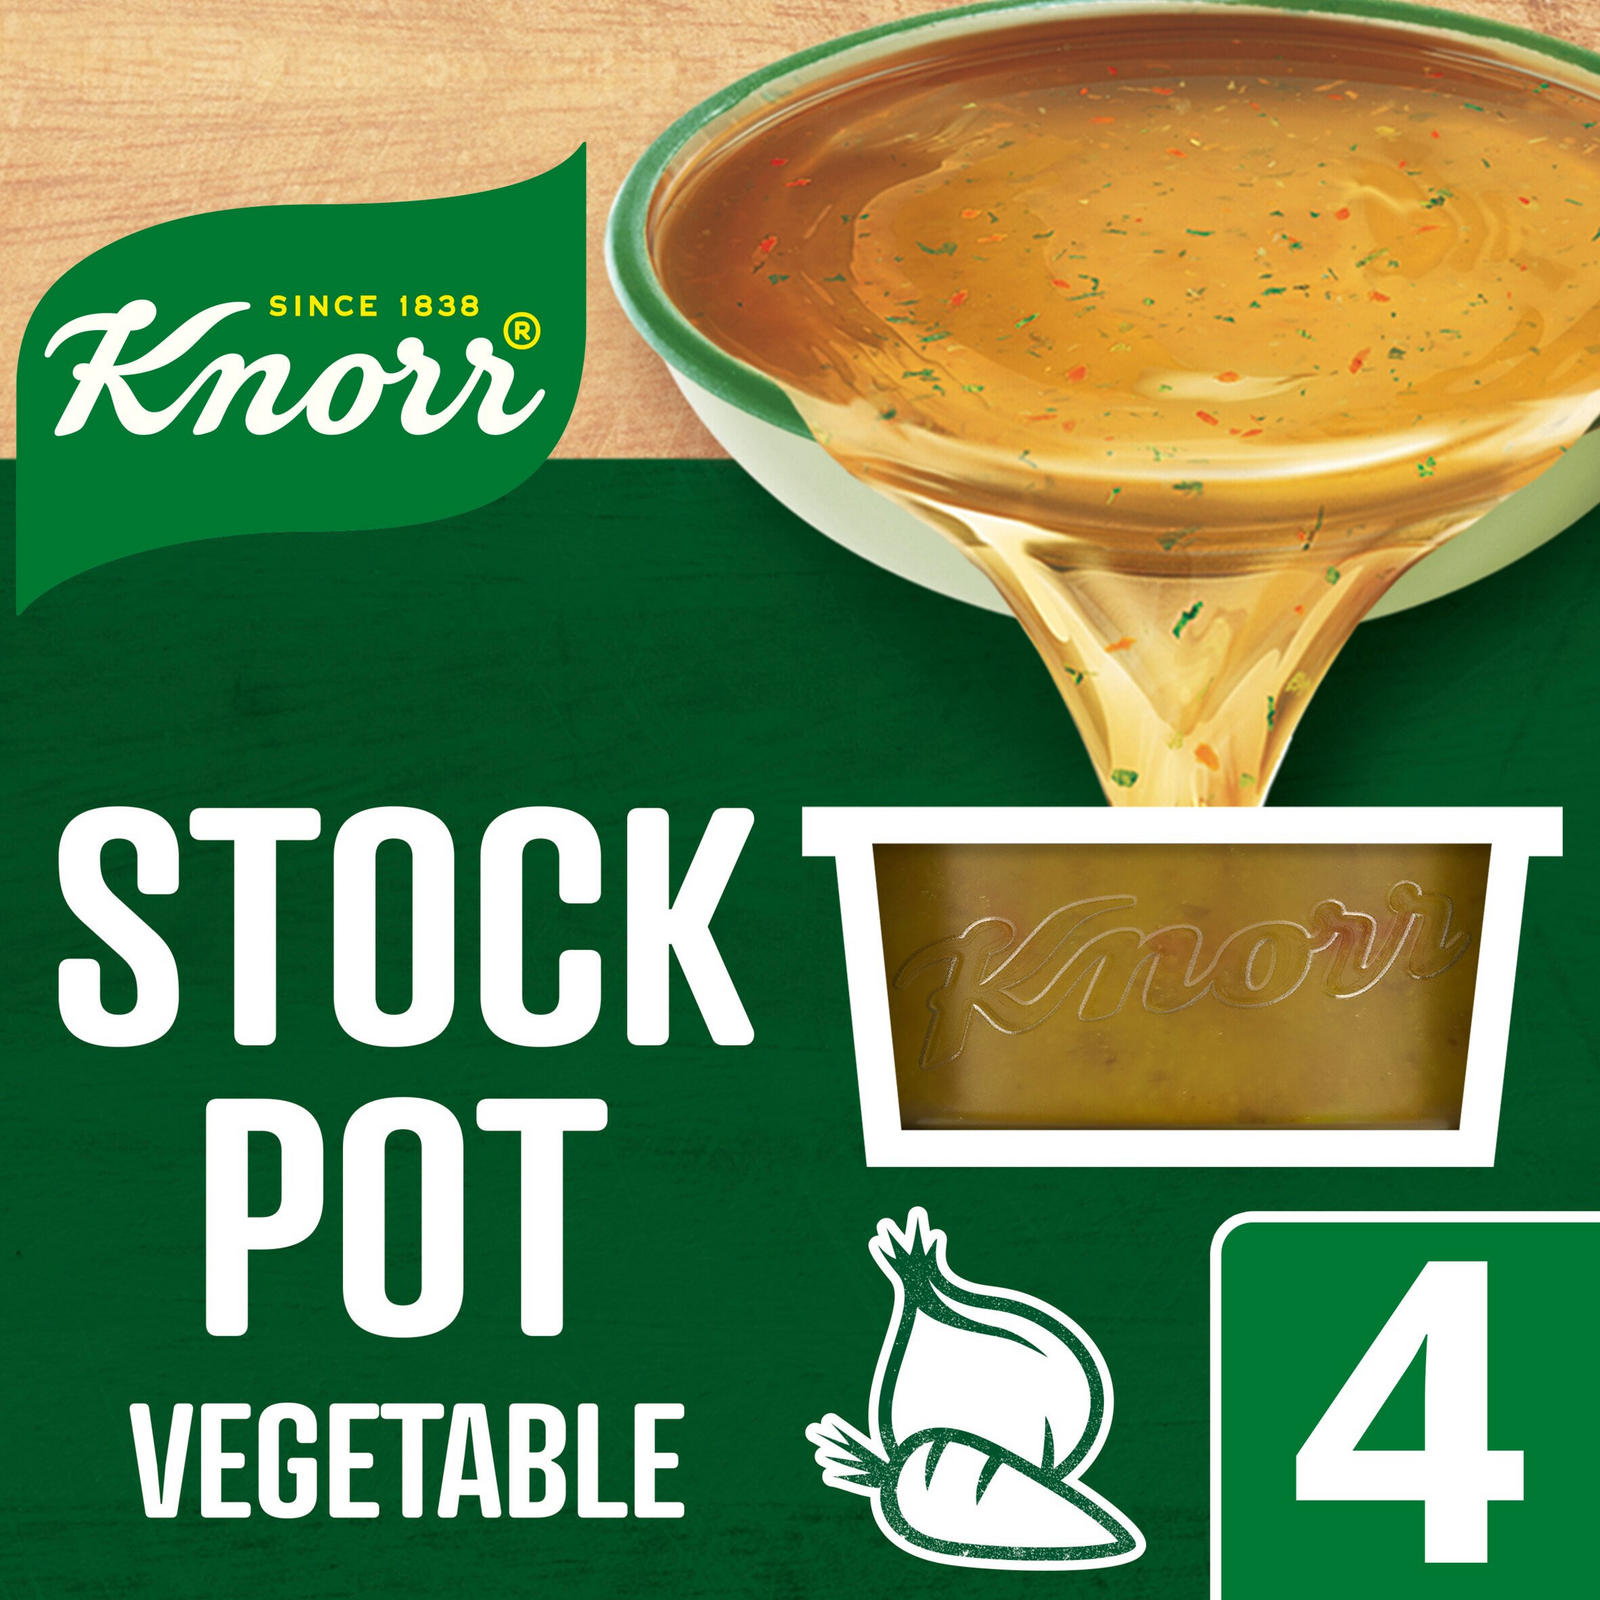 knorr stock pot vegetable 4 x 28 g